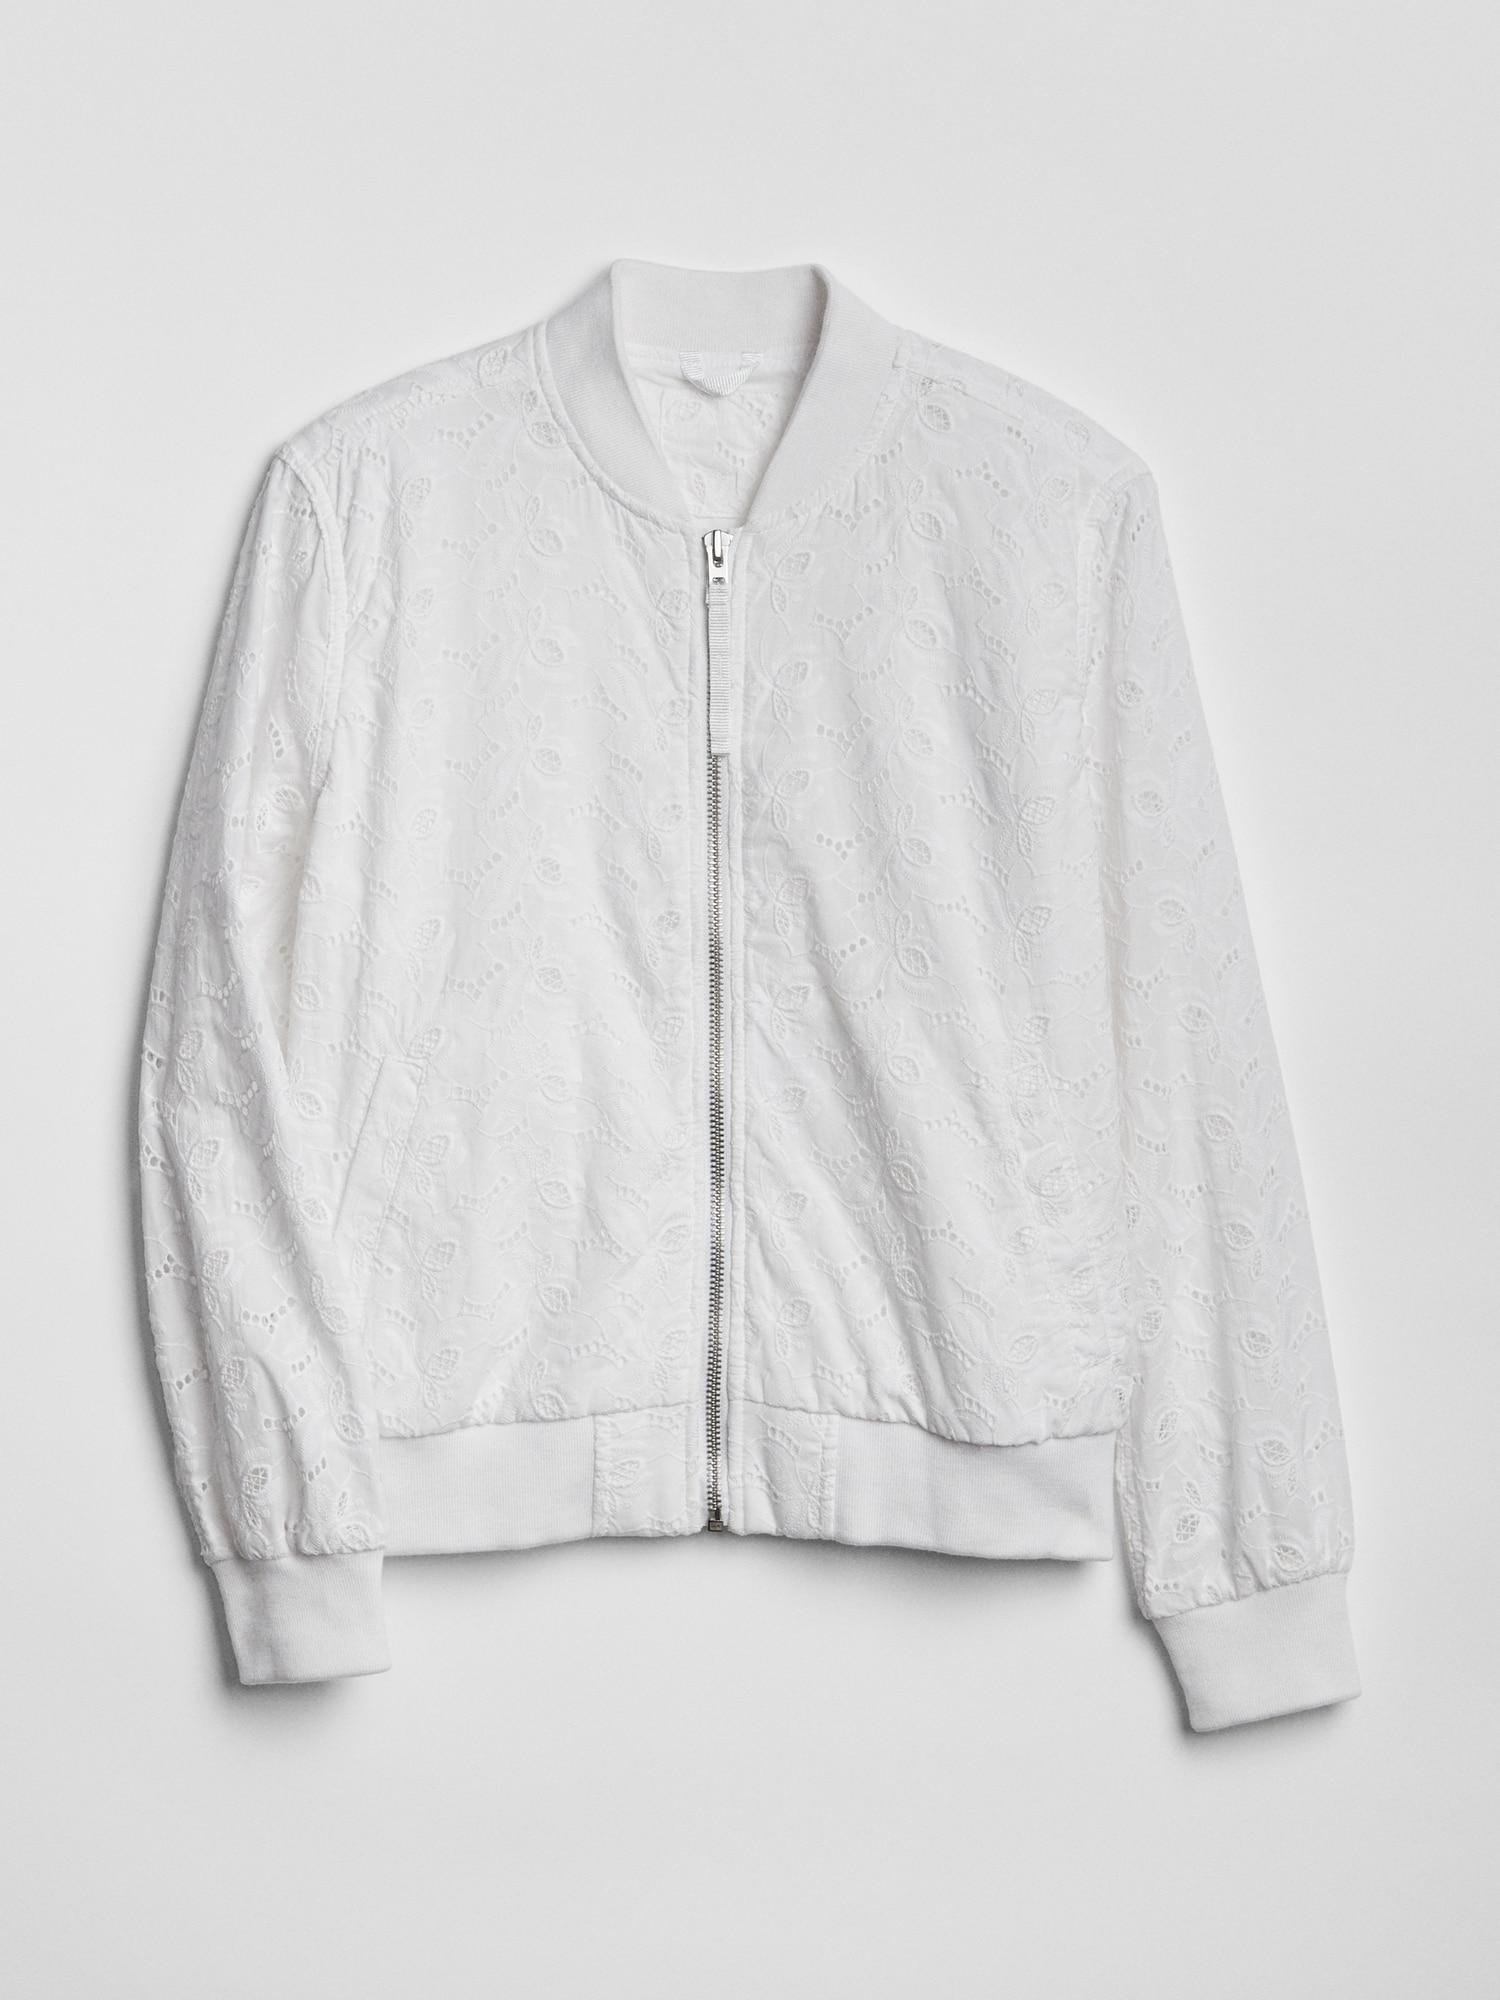 gap white jacket